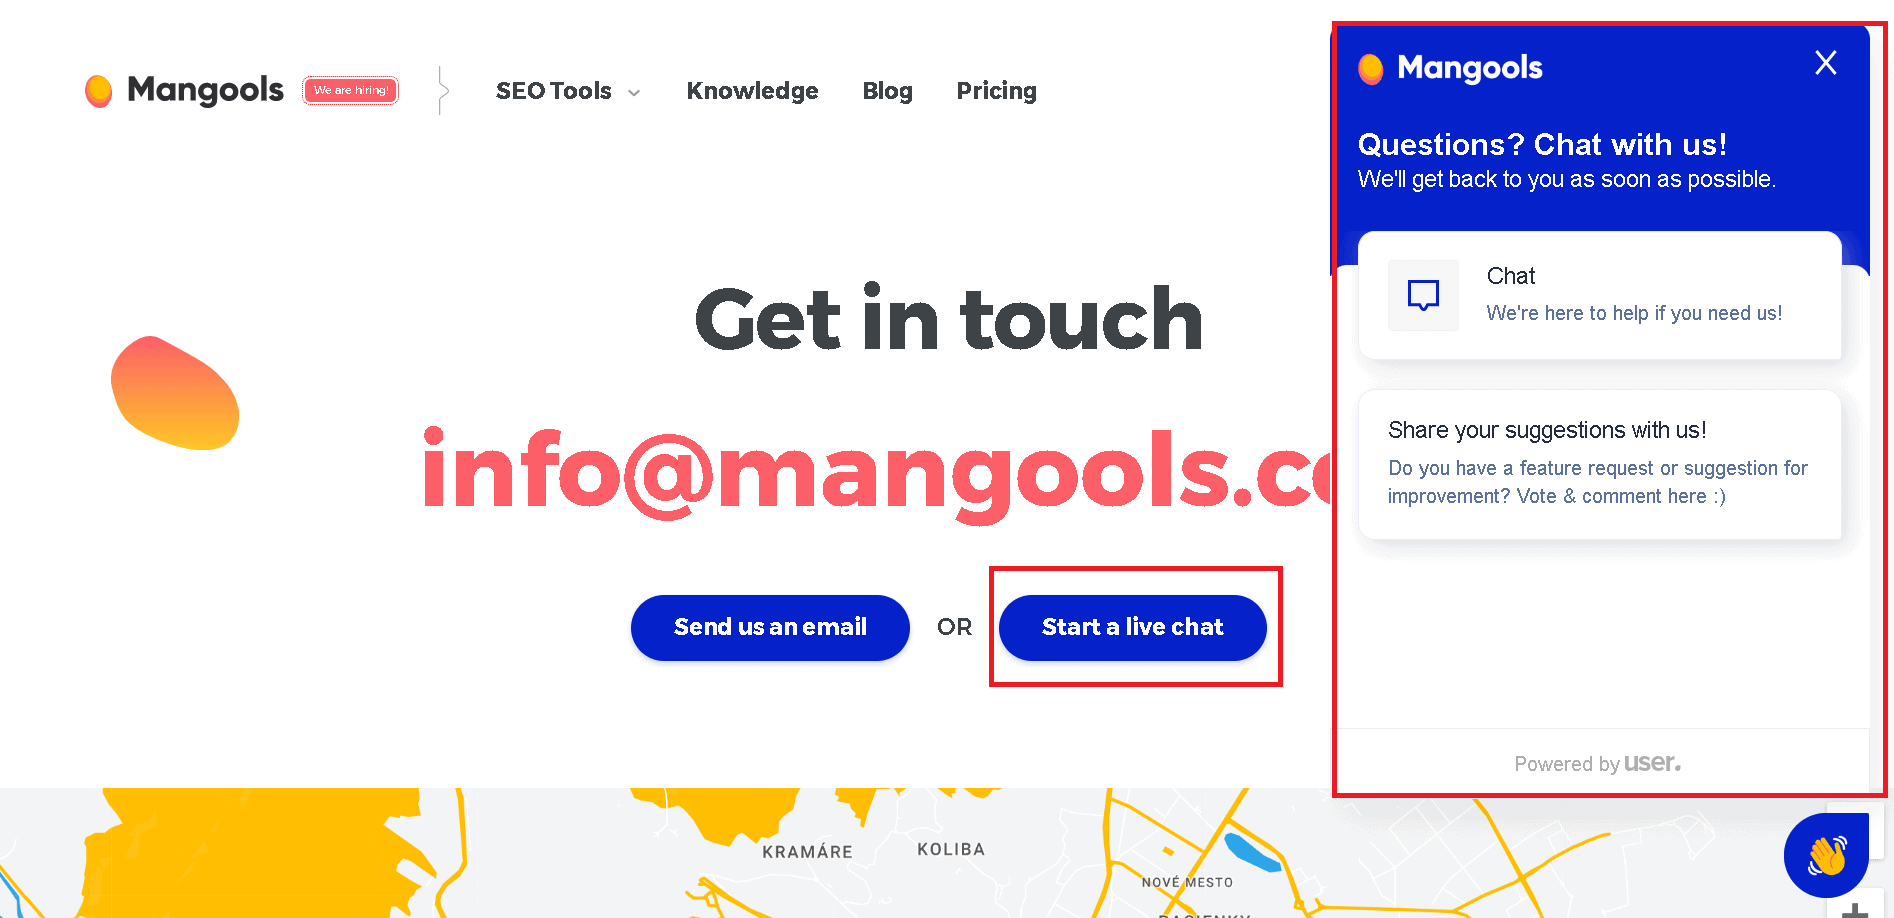 Contact Mangools customer support via live chat